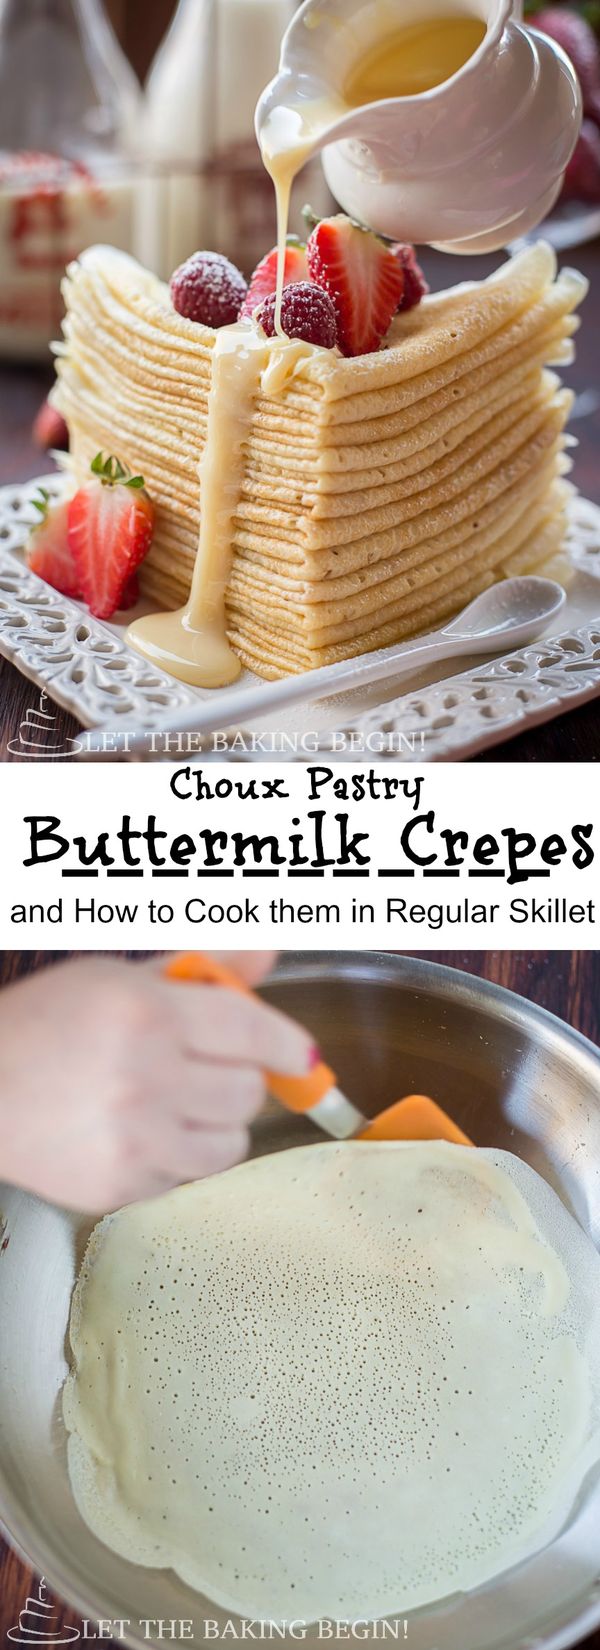 Choux Pastry Buttermilk Crepes (Заварные Блинчики